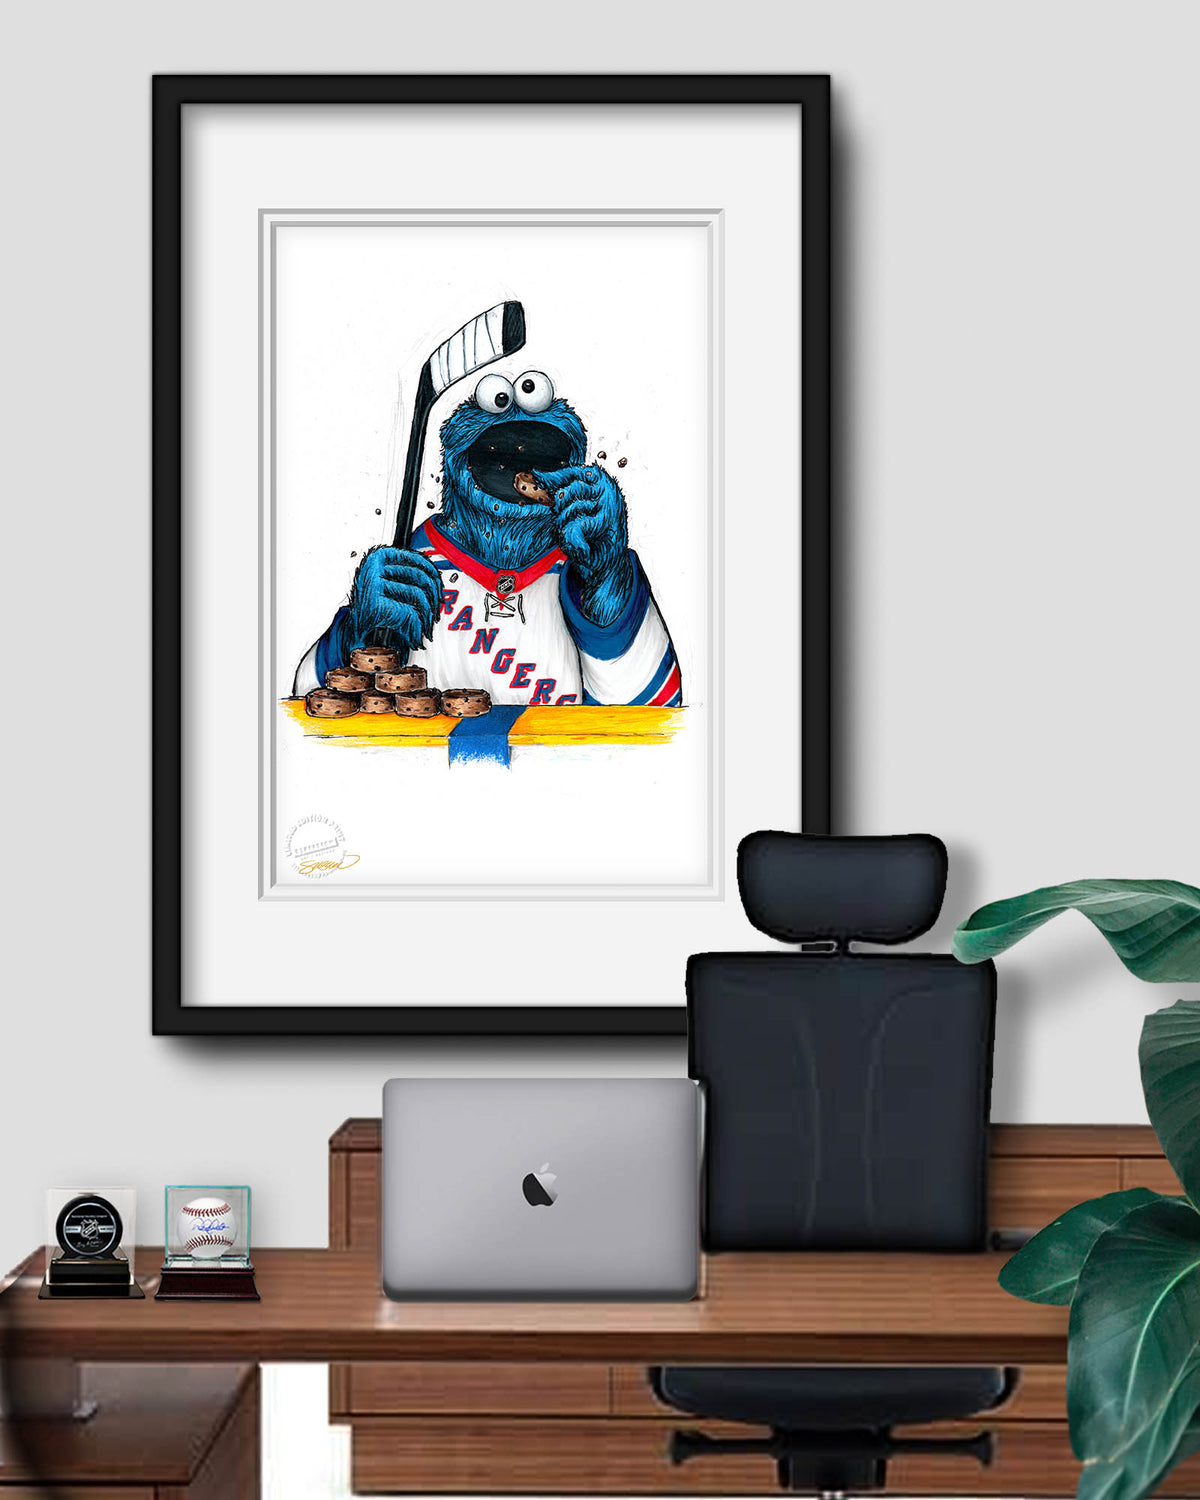 Cookie Monster Paint Kit – Moe's Custom Graphics